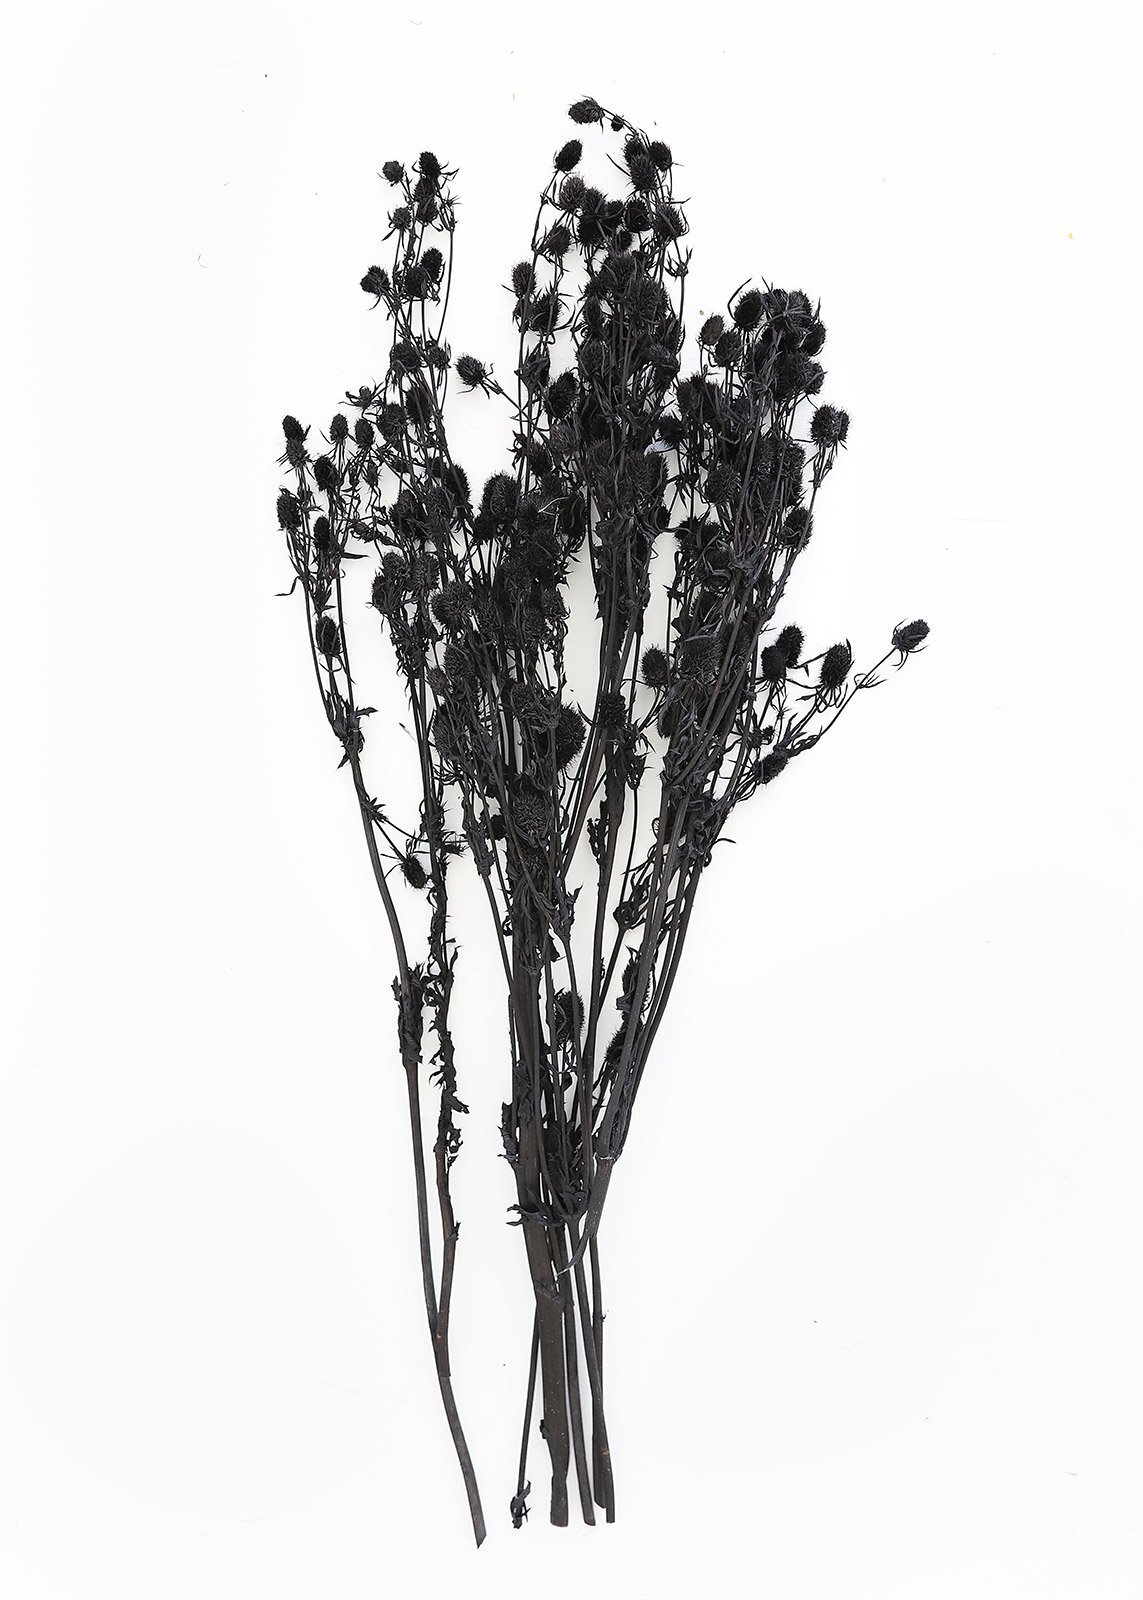 Black Dried Eryngium Sea Holly Flowers